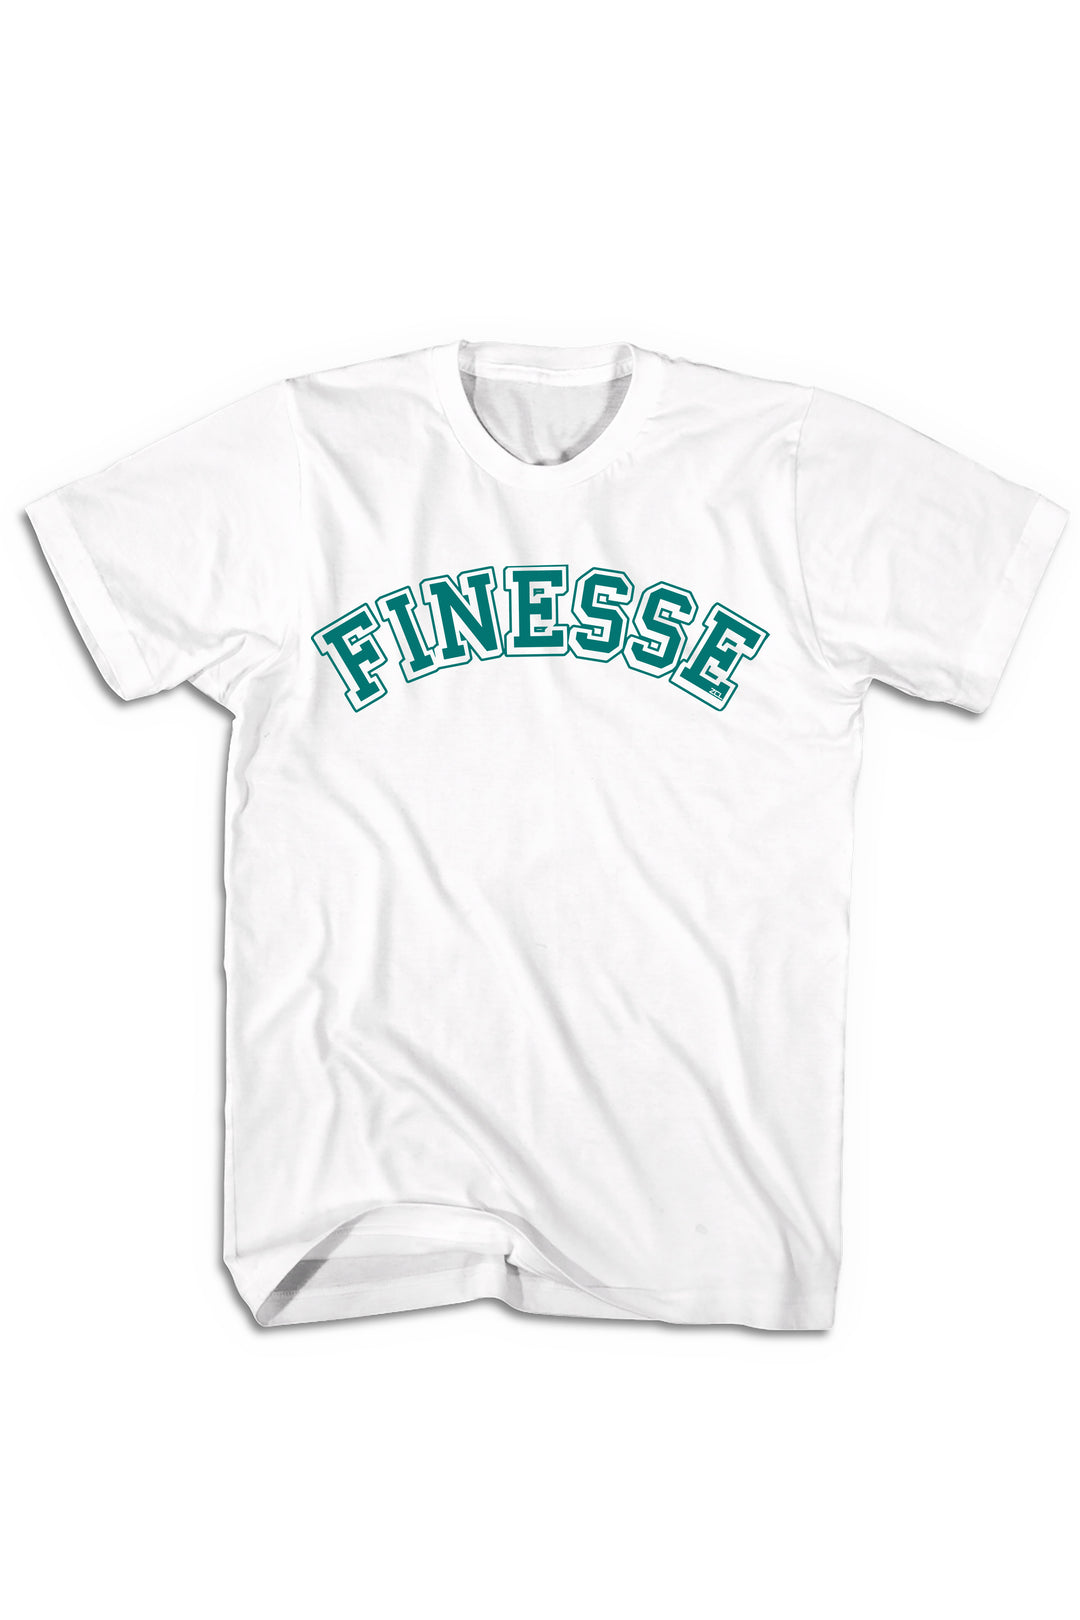 Finesse Tee (Teal Logo) - Zamage